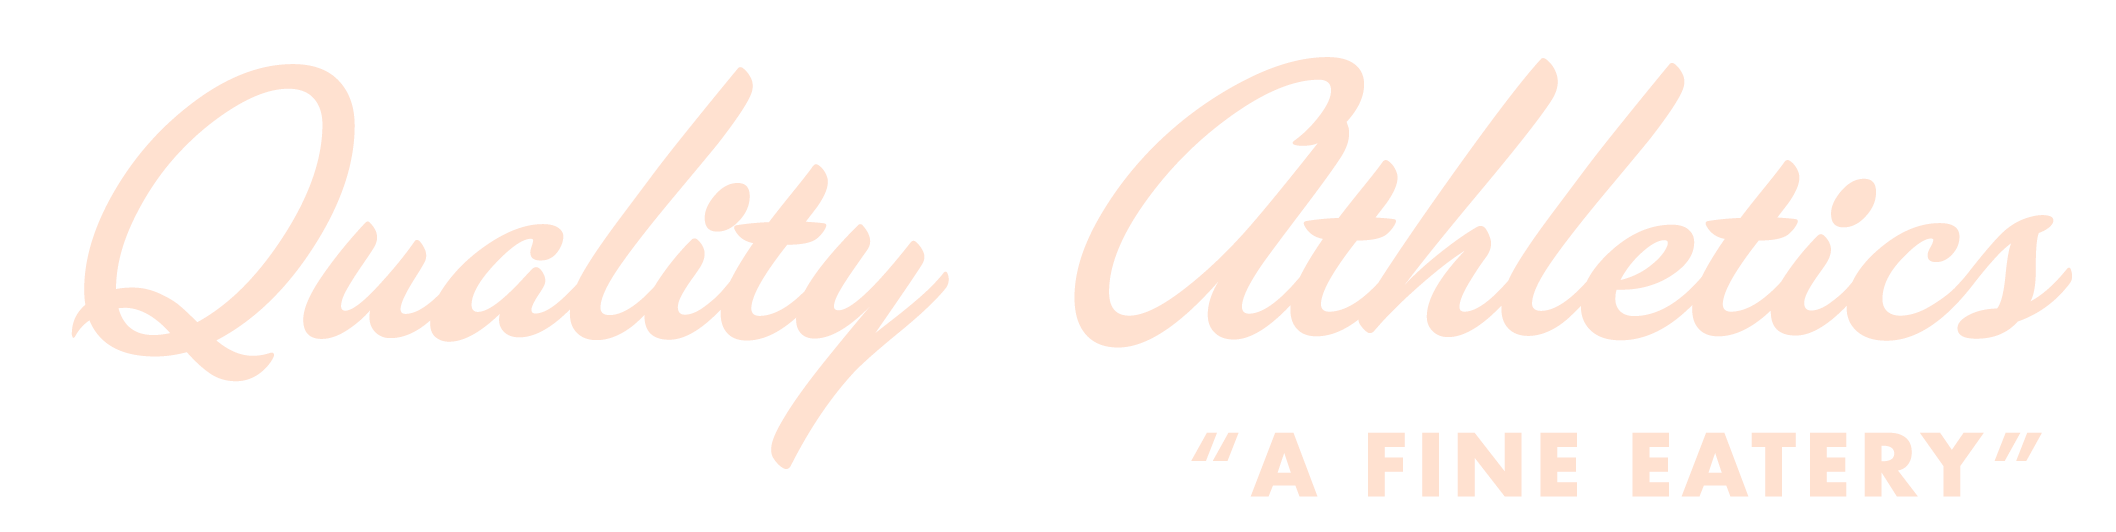 Quality Athletics Logo